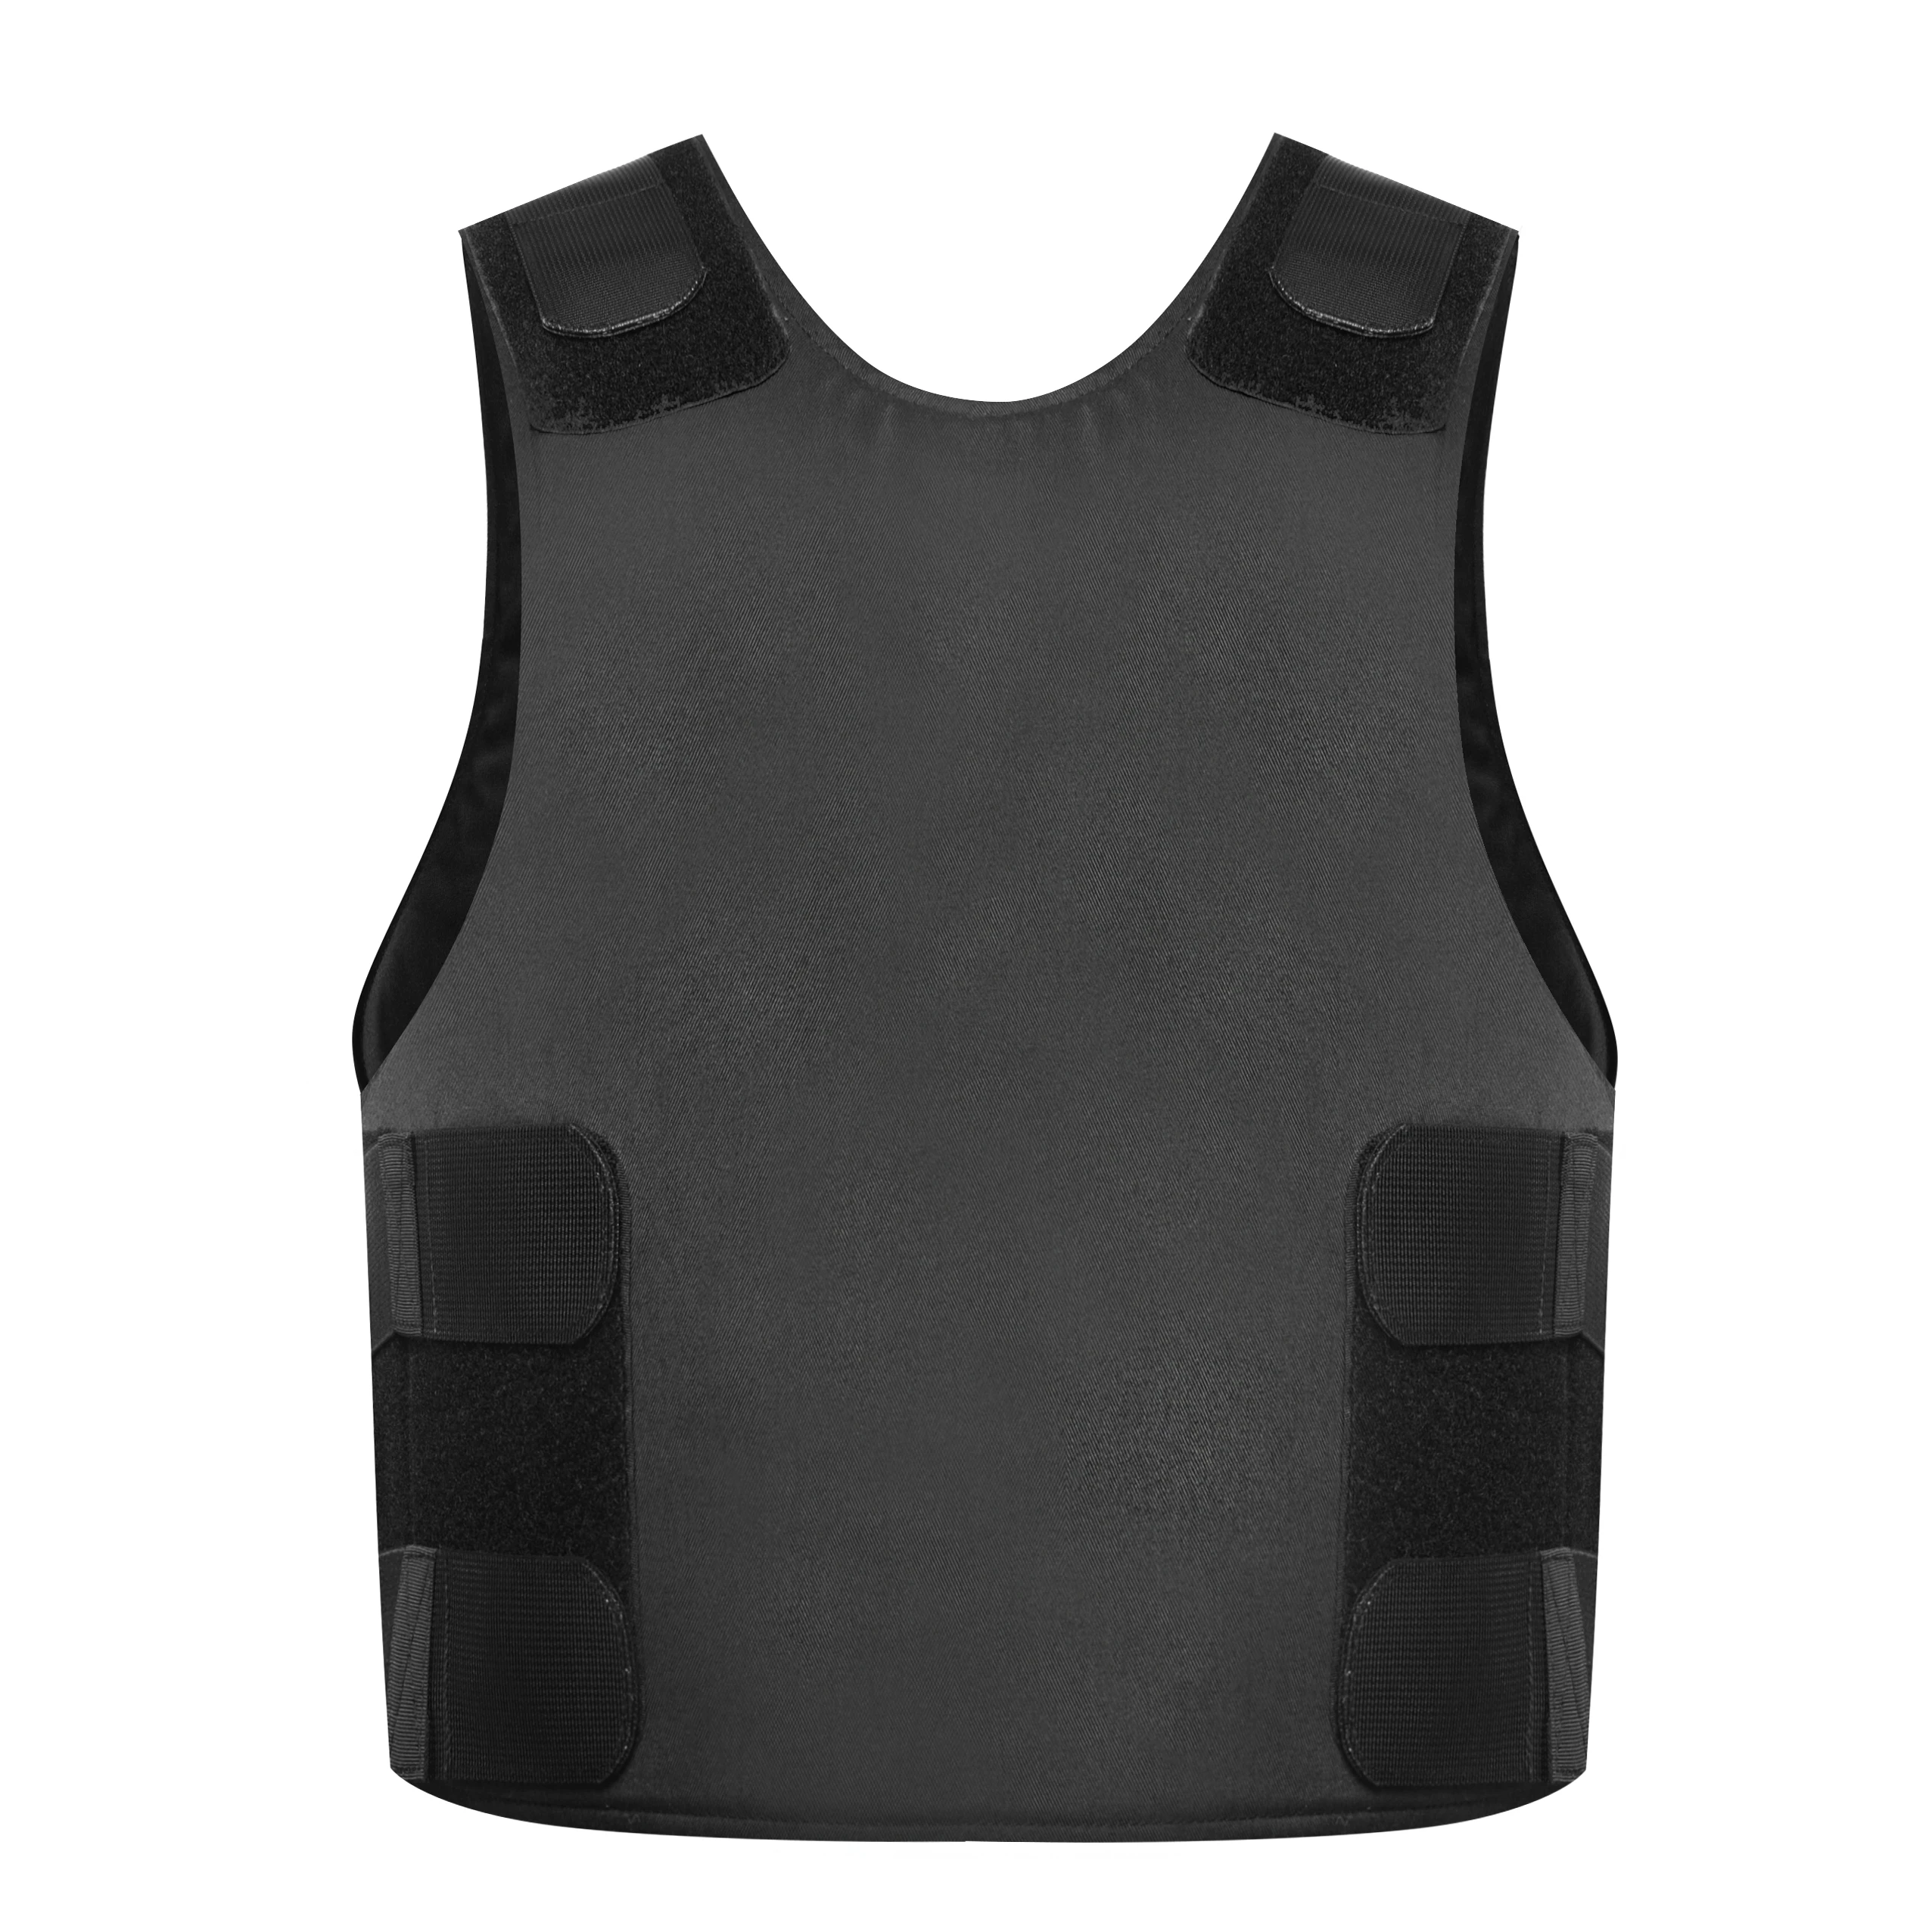 Custom Soldier Bulletproof Body Armor Black Combat Safety Military Bullet proof Vest